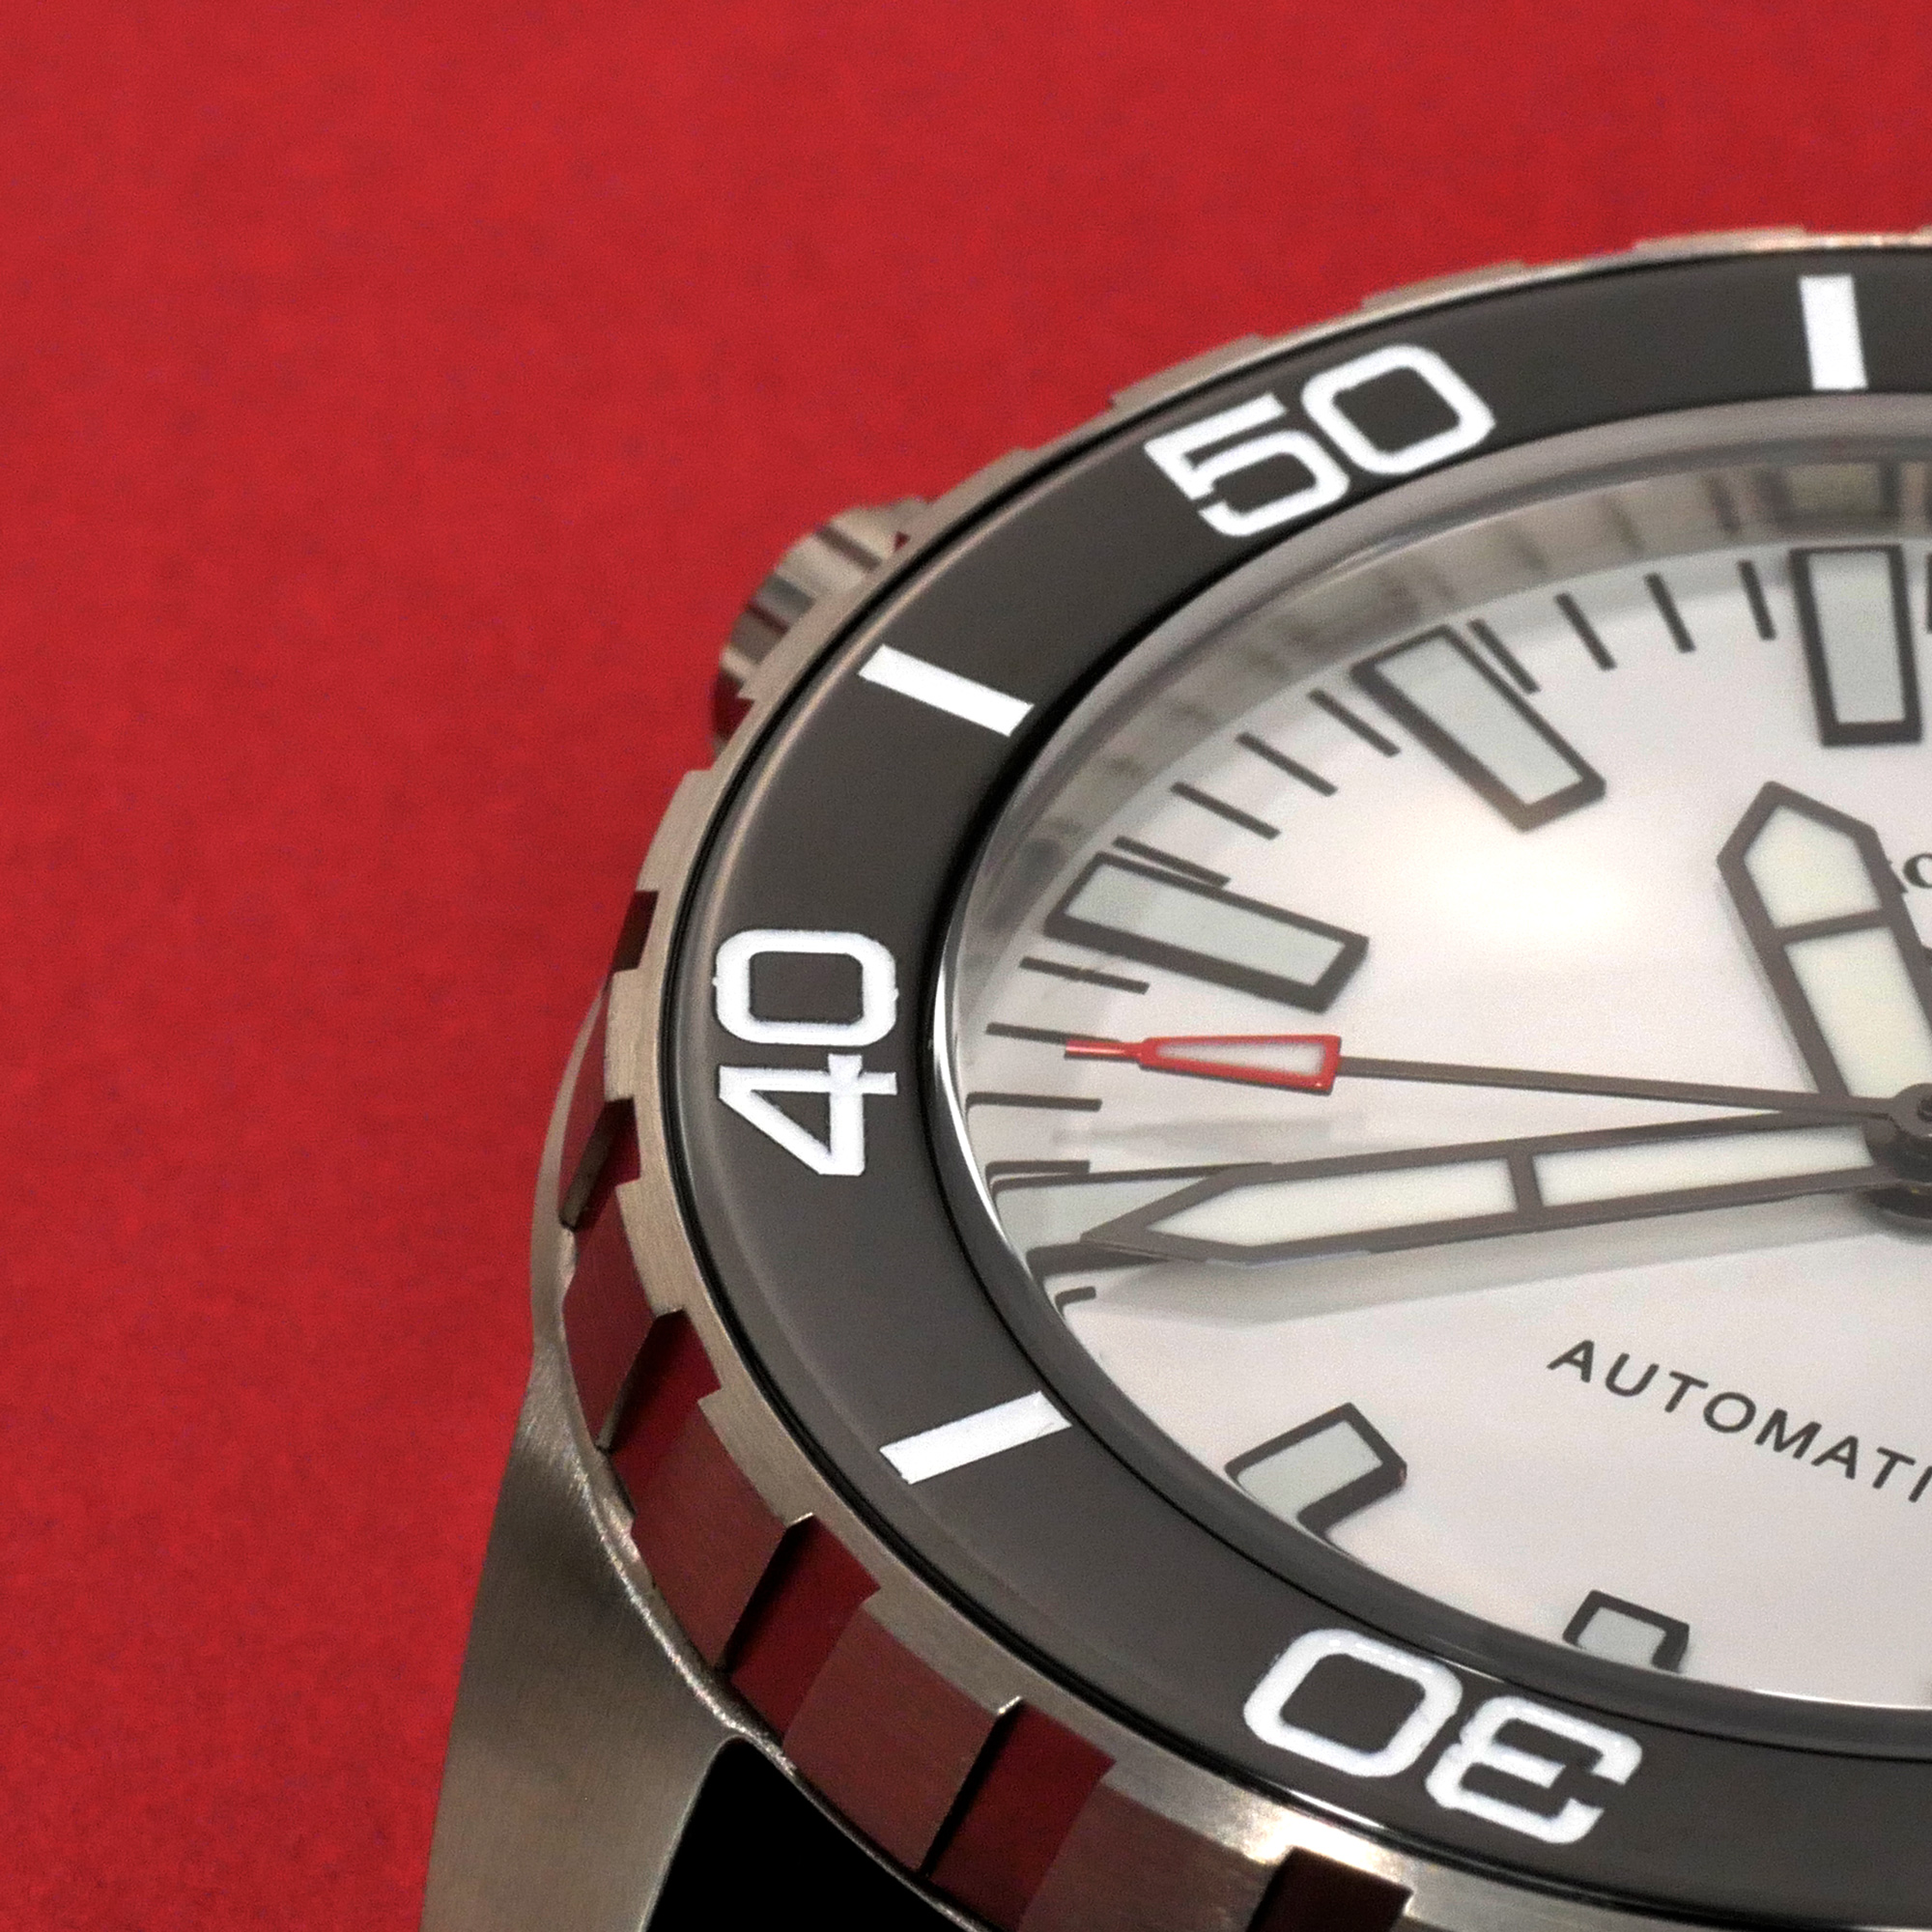 Zeno-Watch Basel Professional Diver Automatic Swiss Men's Watch 6603-2824-A2